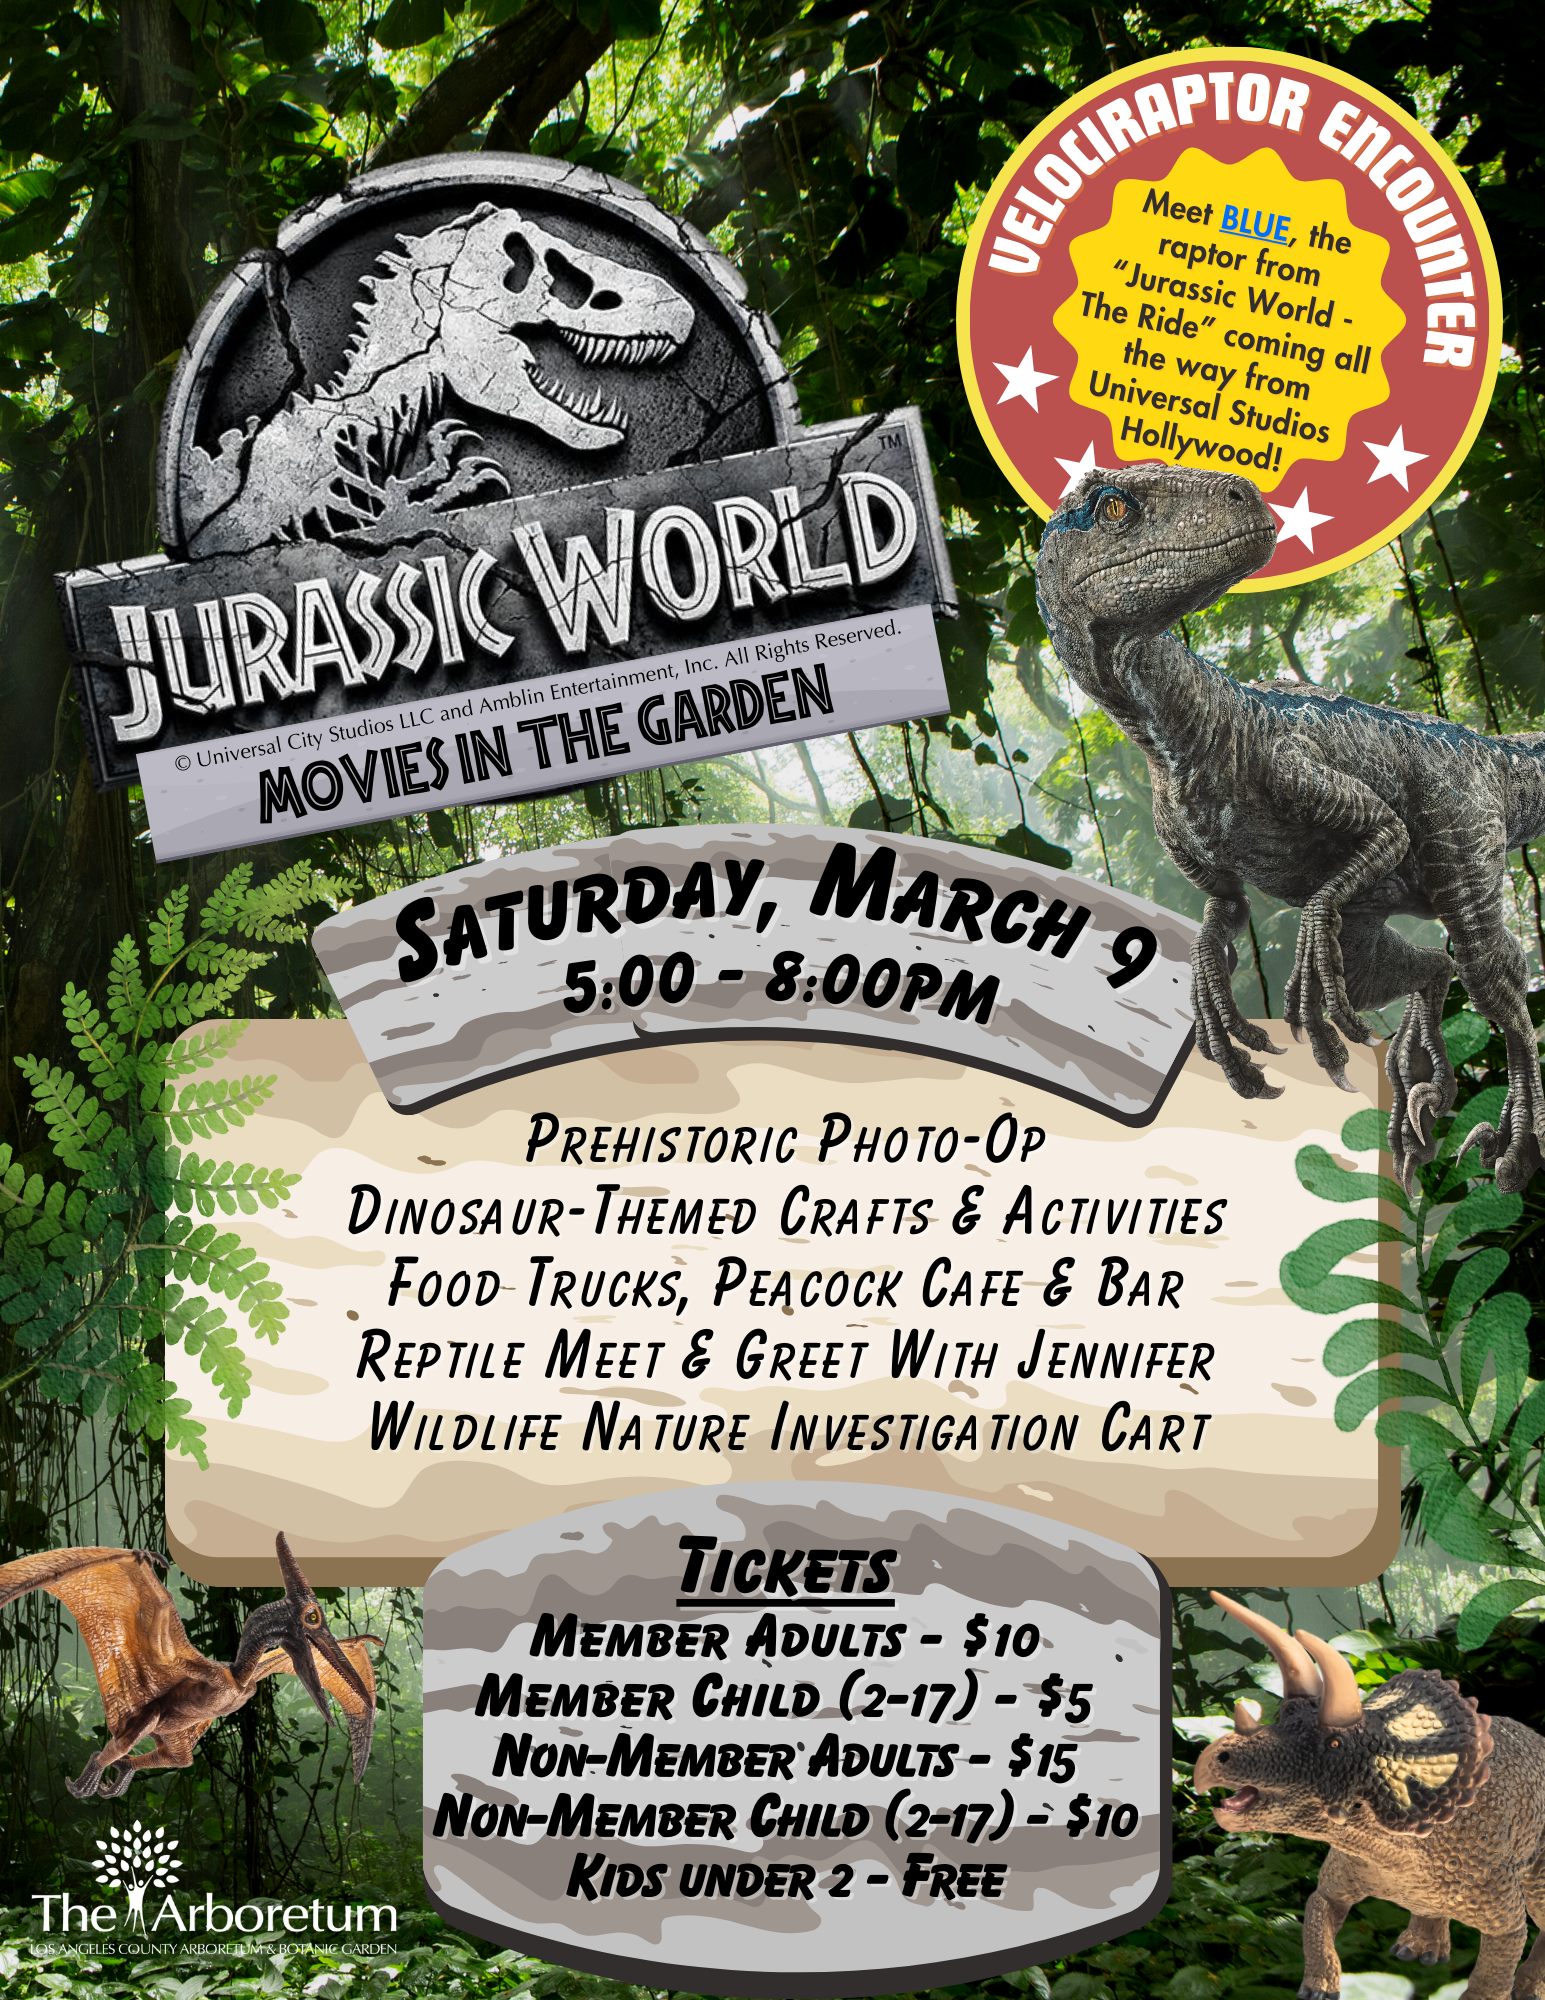 LA Arboretum movies in the Garden featuring Jurassic World 